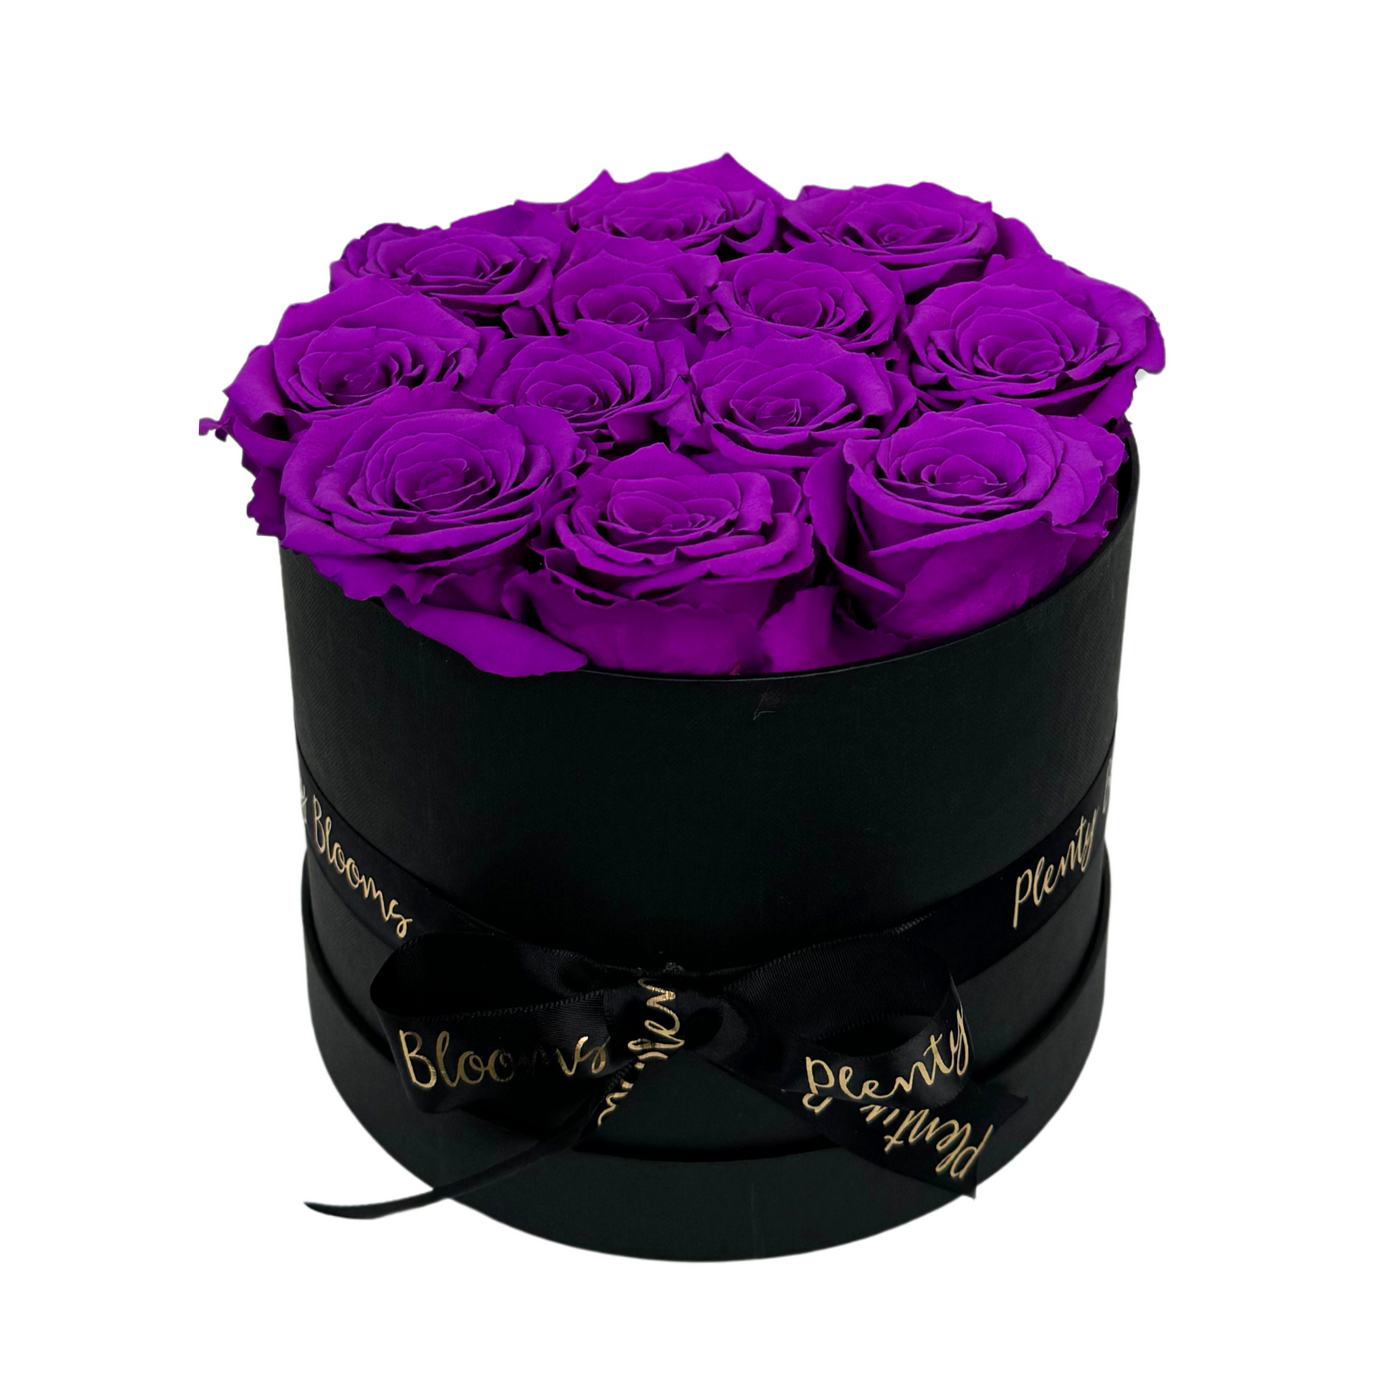 Signature Purple Preserved Roses Gift Box